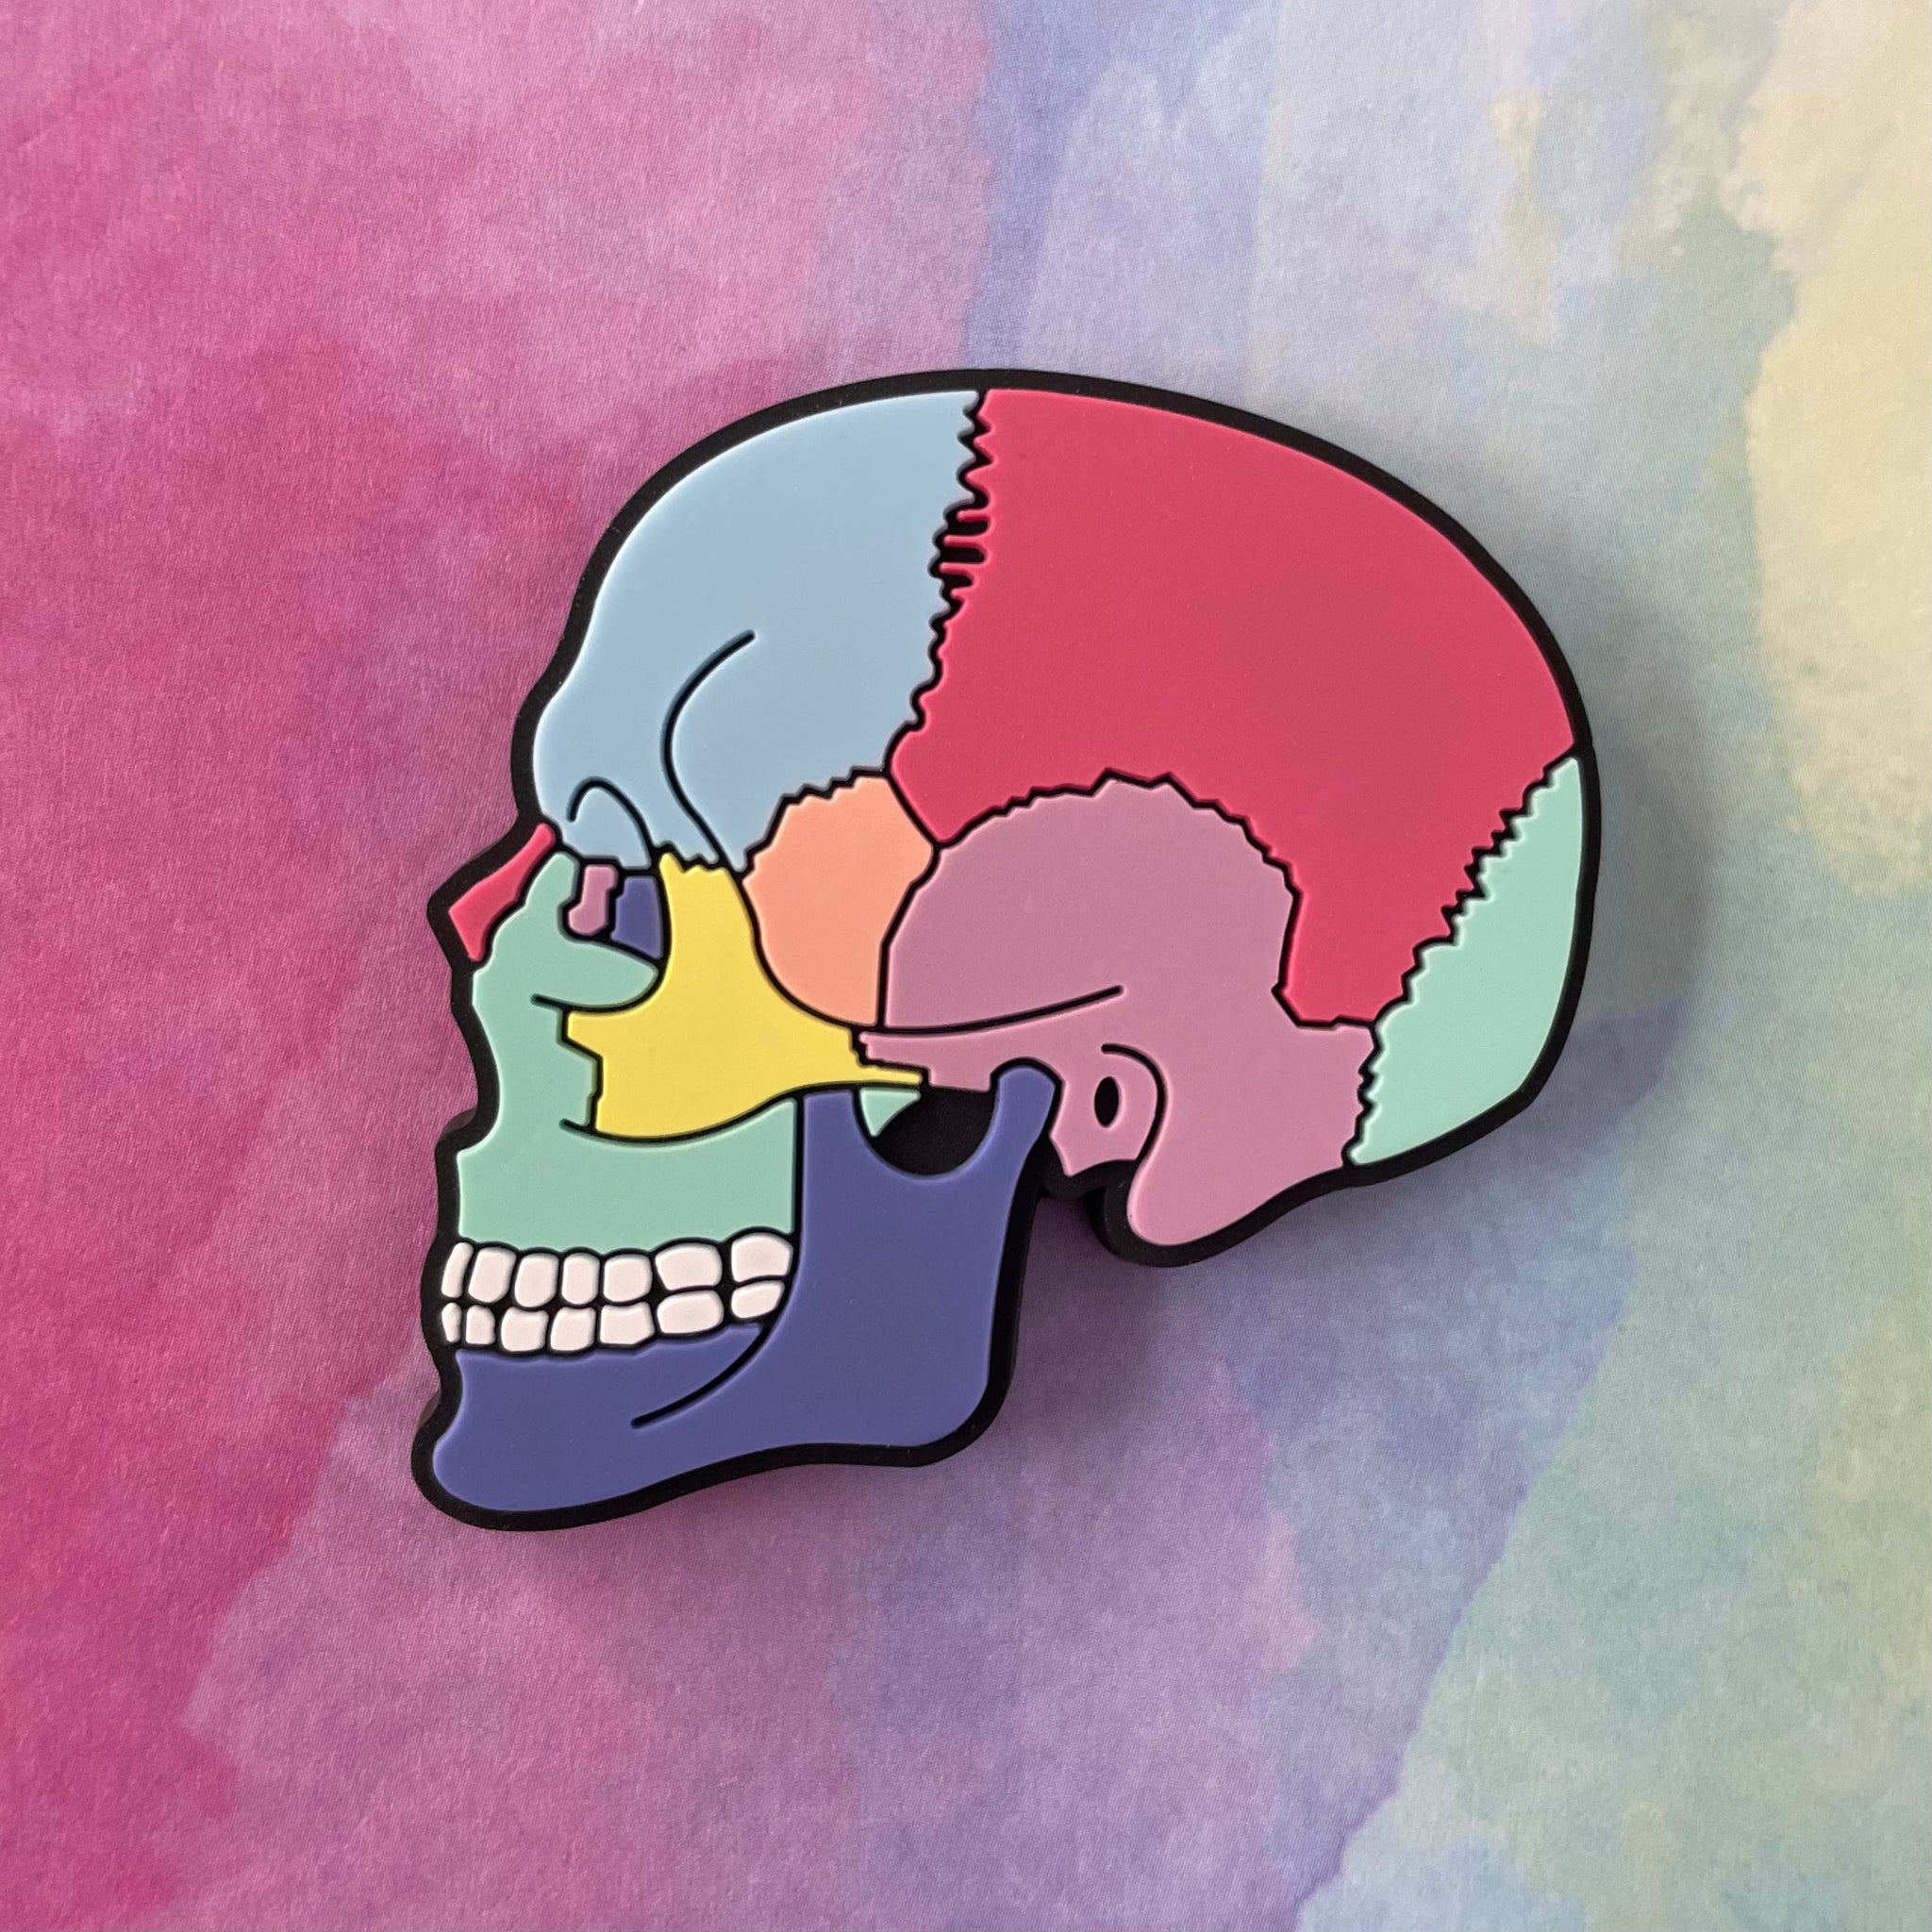 Textbook Anatomy Skull Badge Reel - Rad Girl Creations